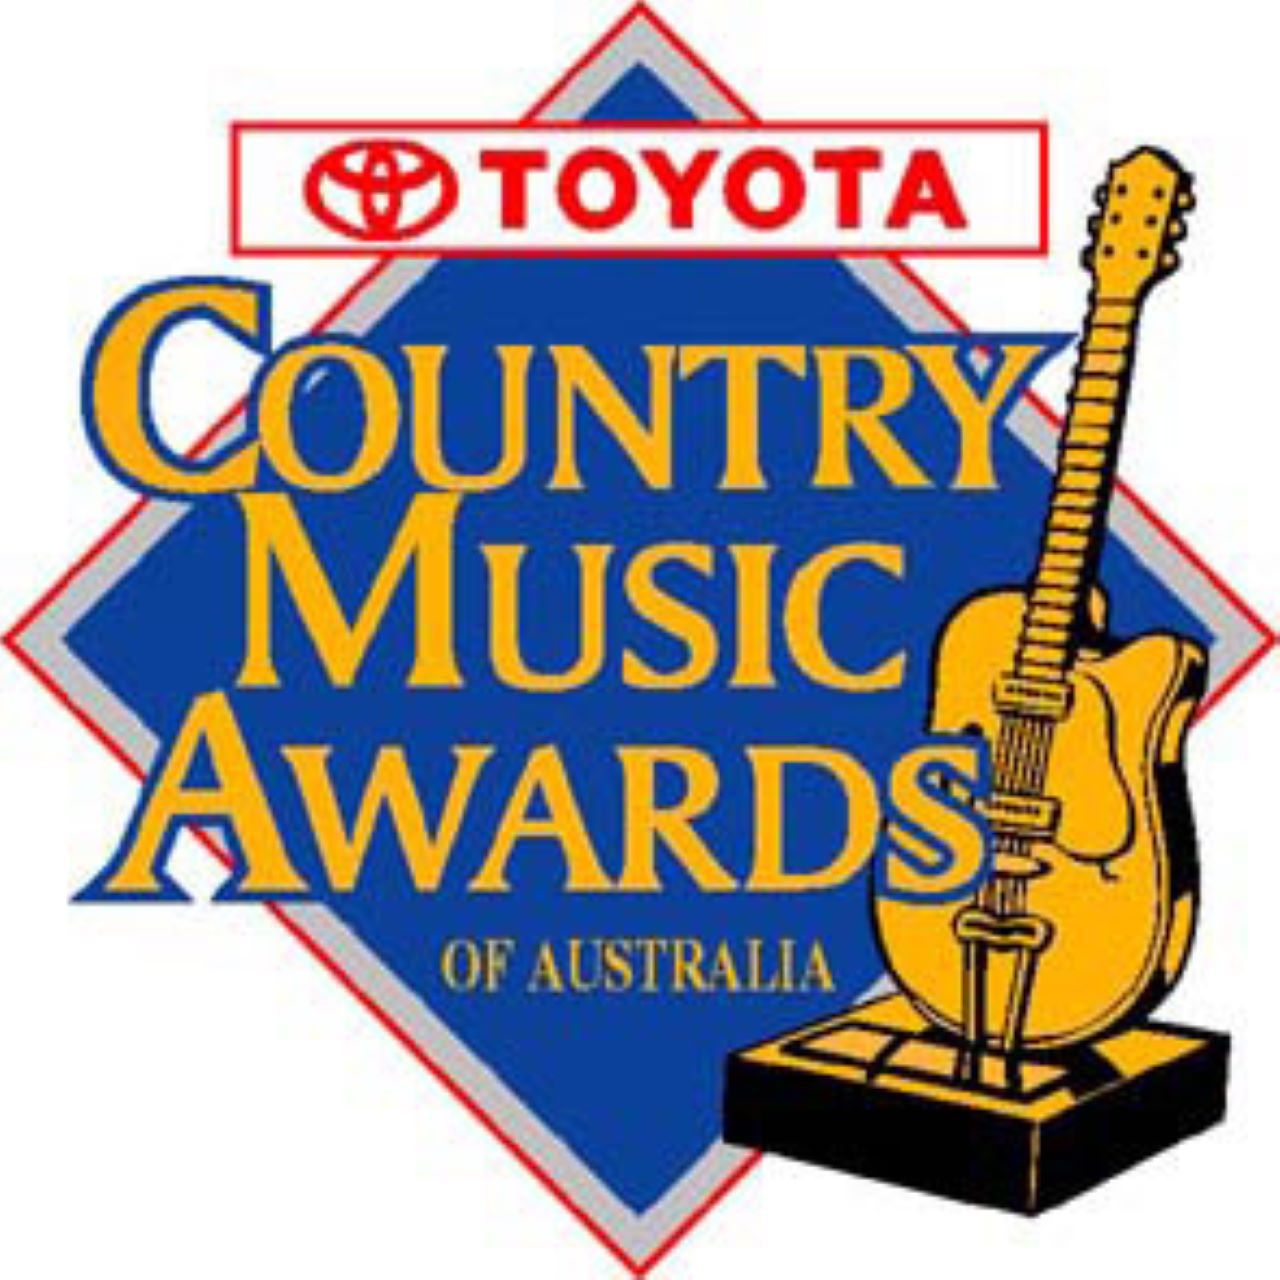 1999 Toyota Country Music Awards Australia